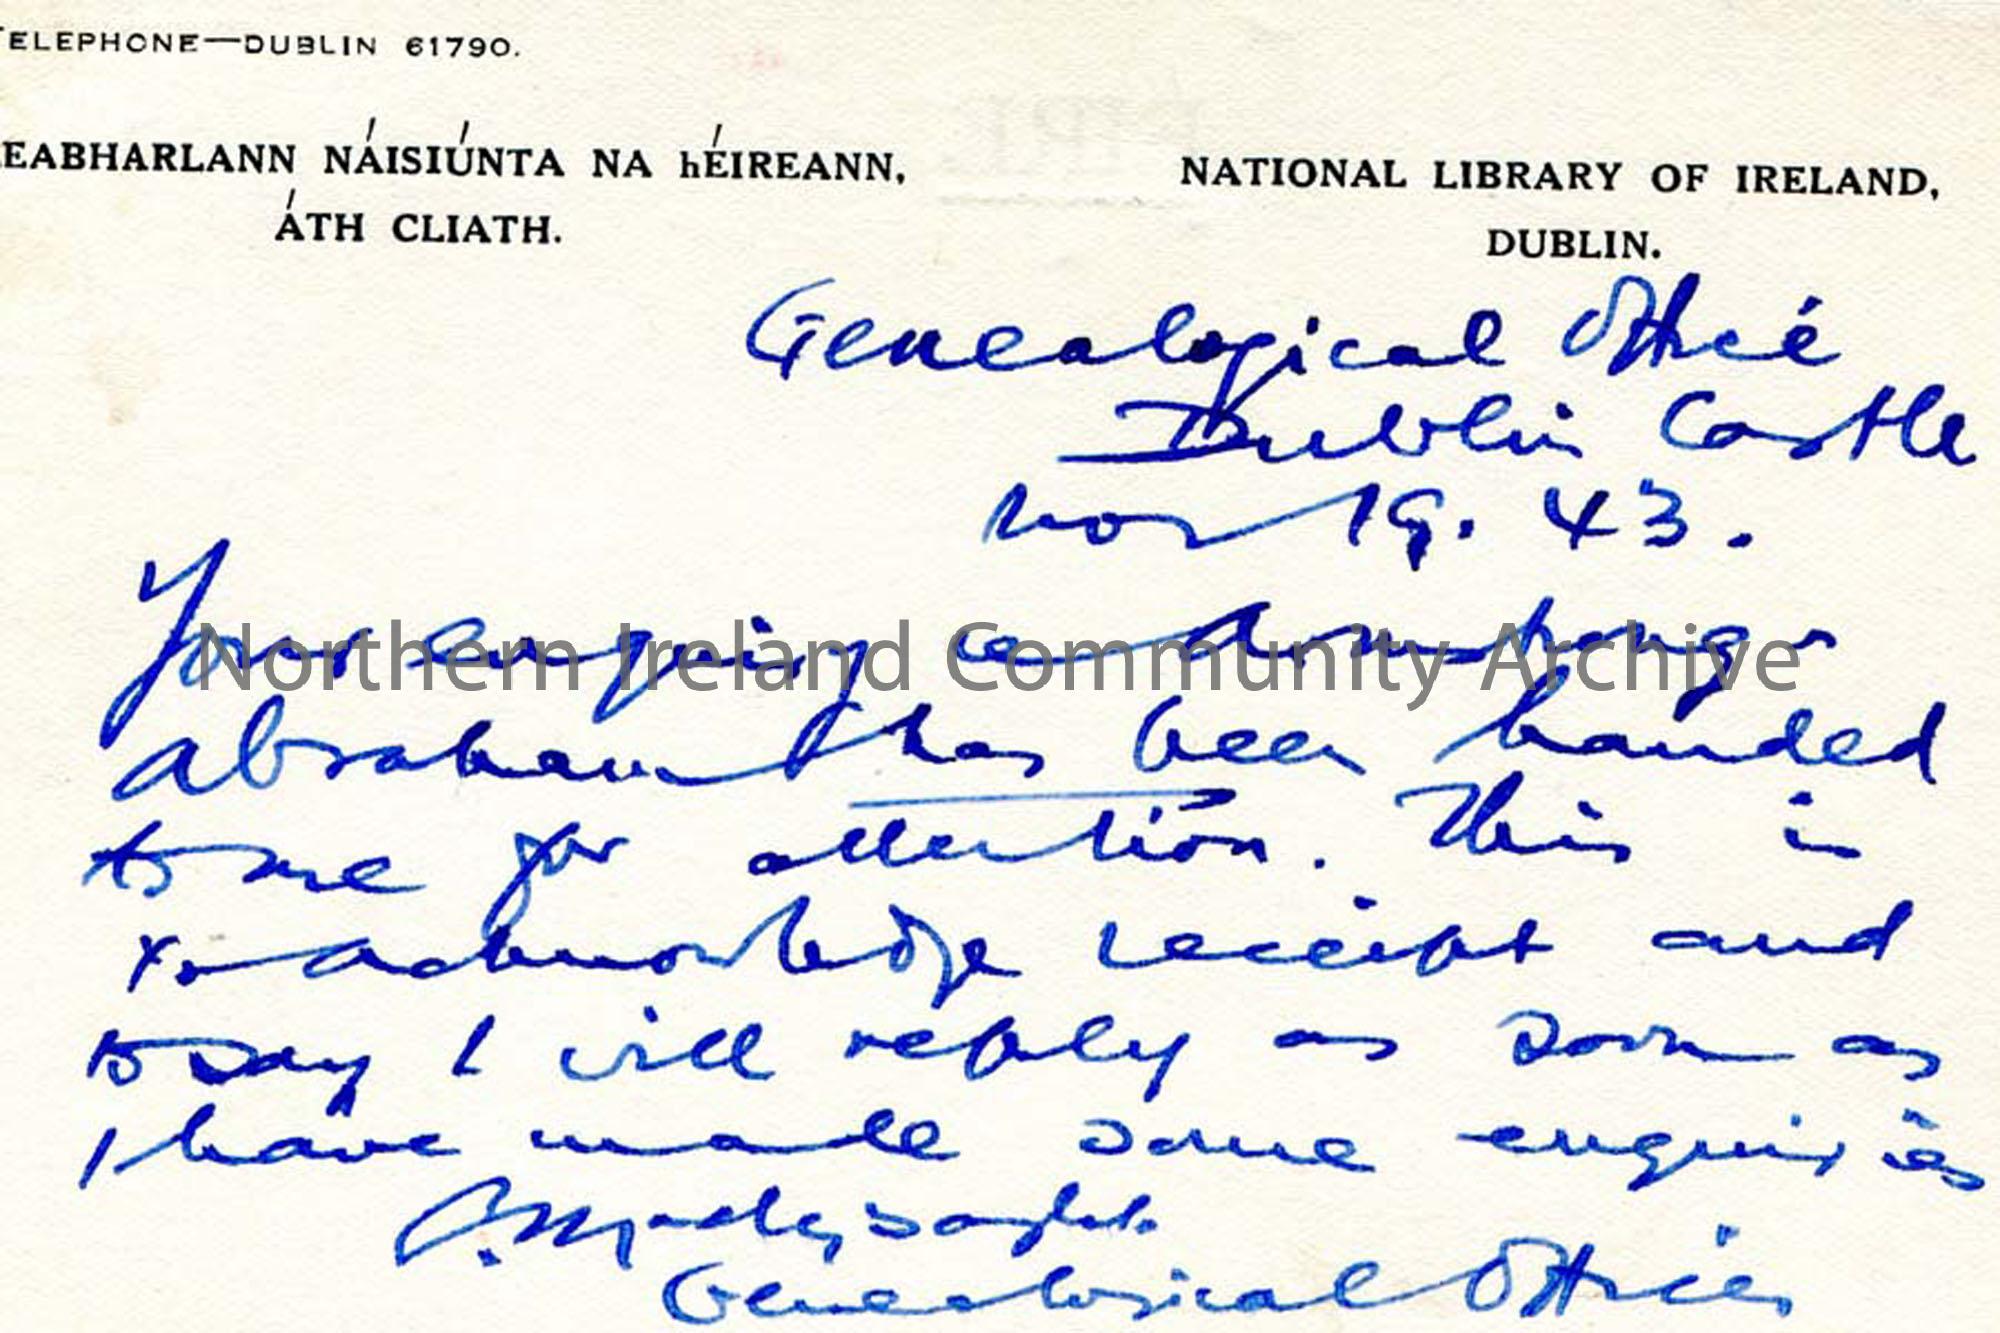 Postcard from Dublin Castle 19.11.1943